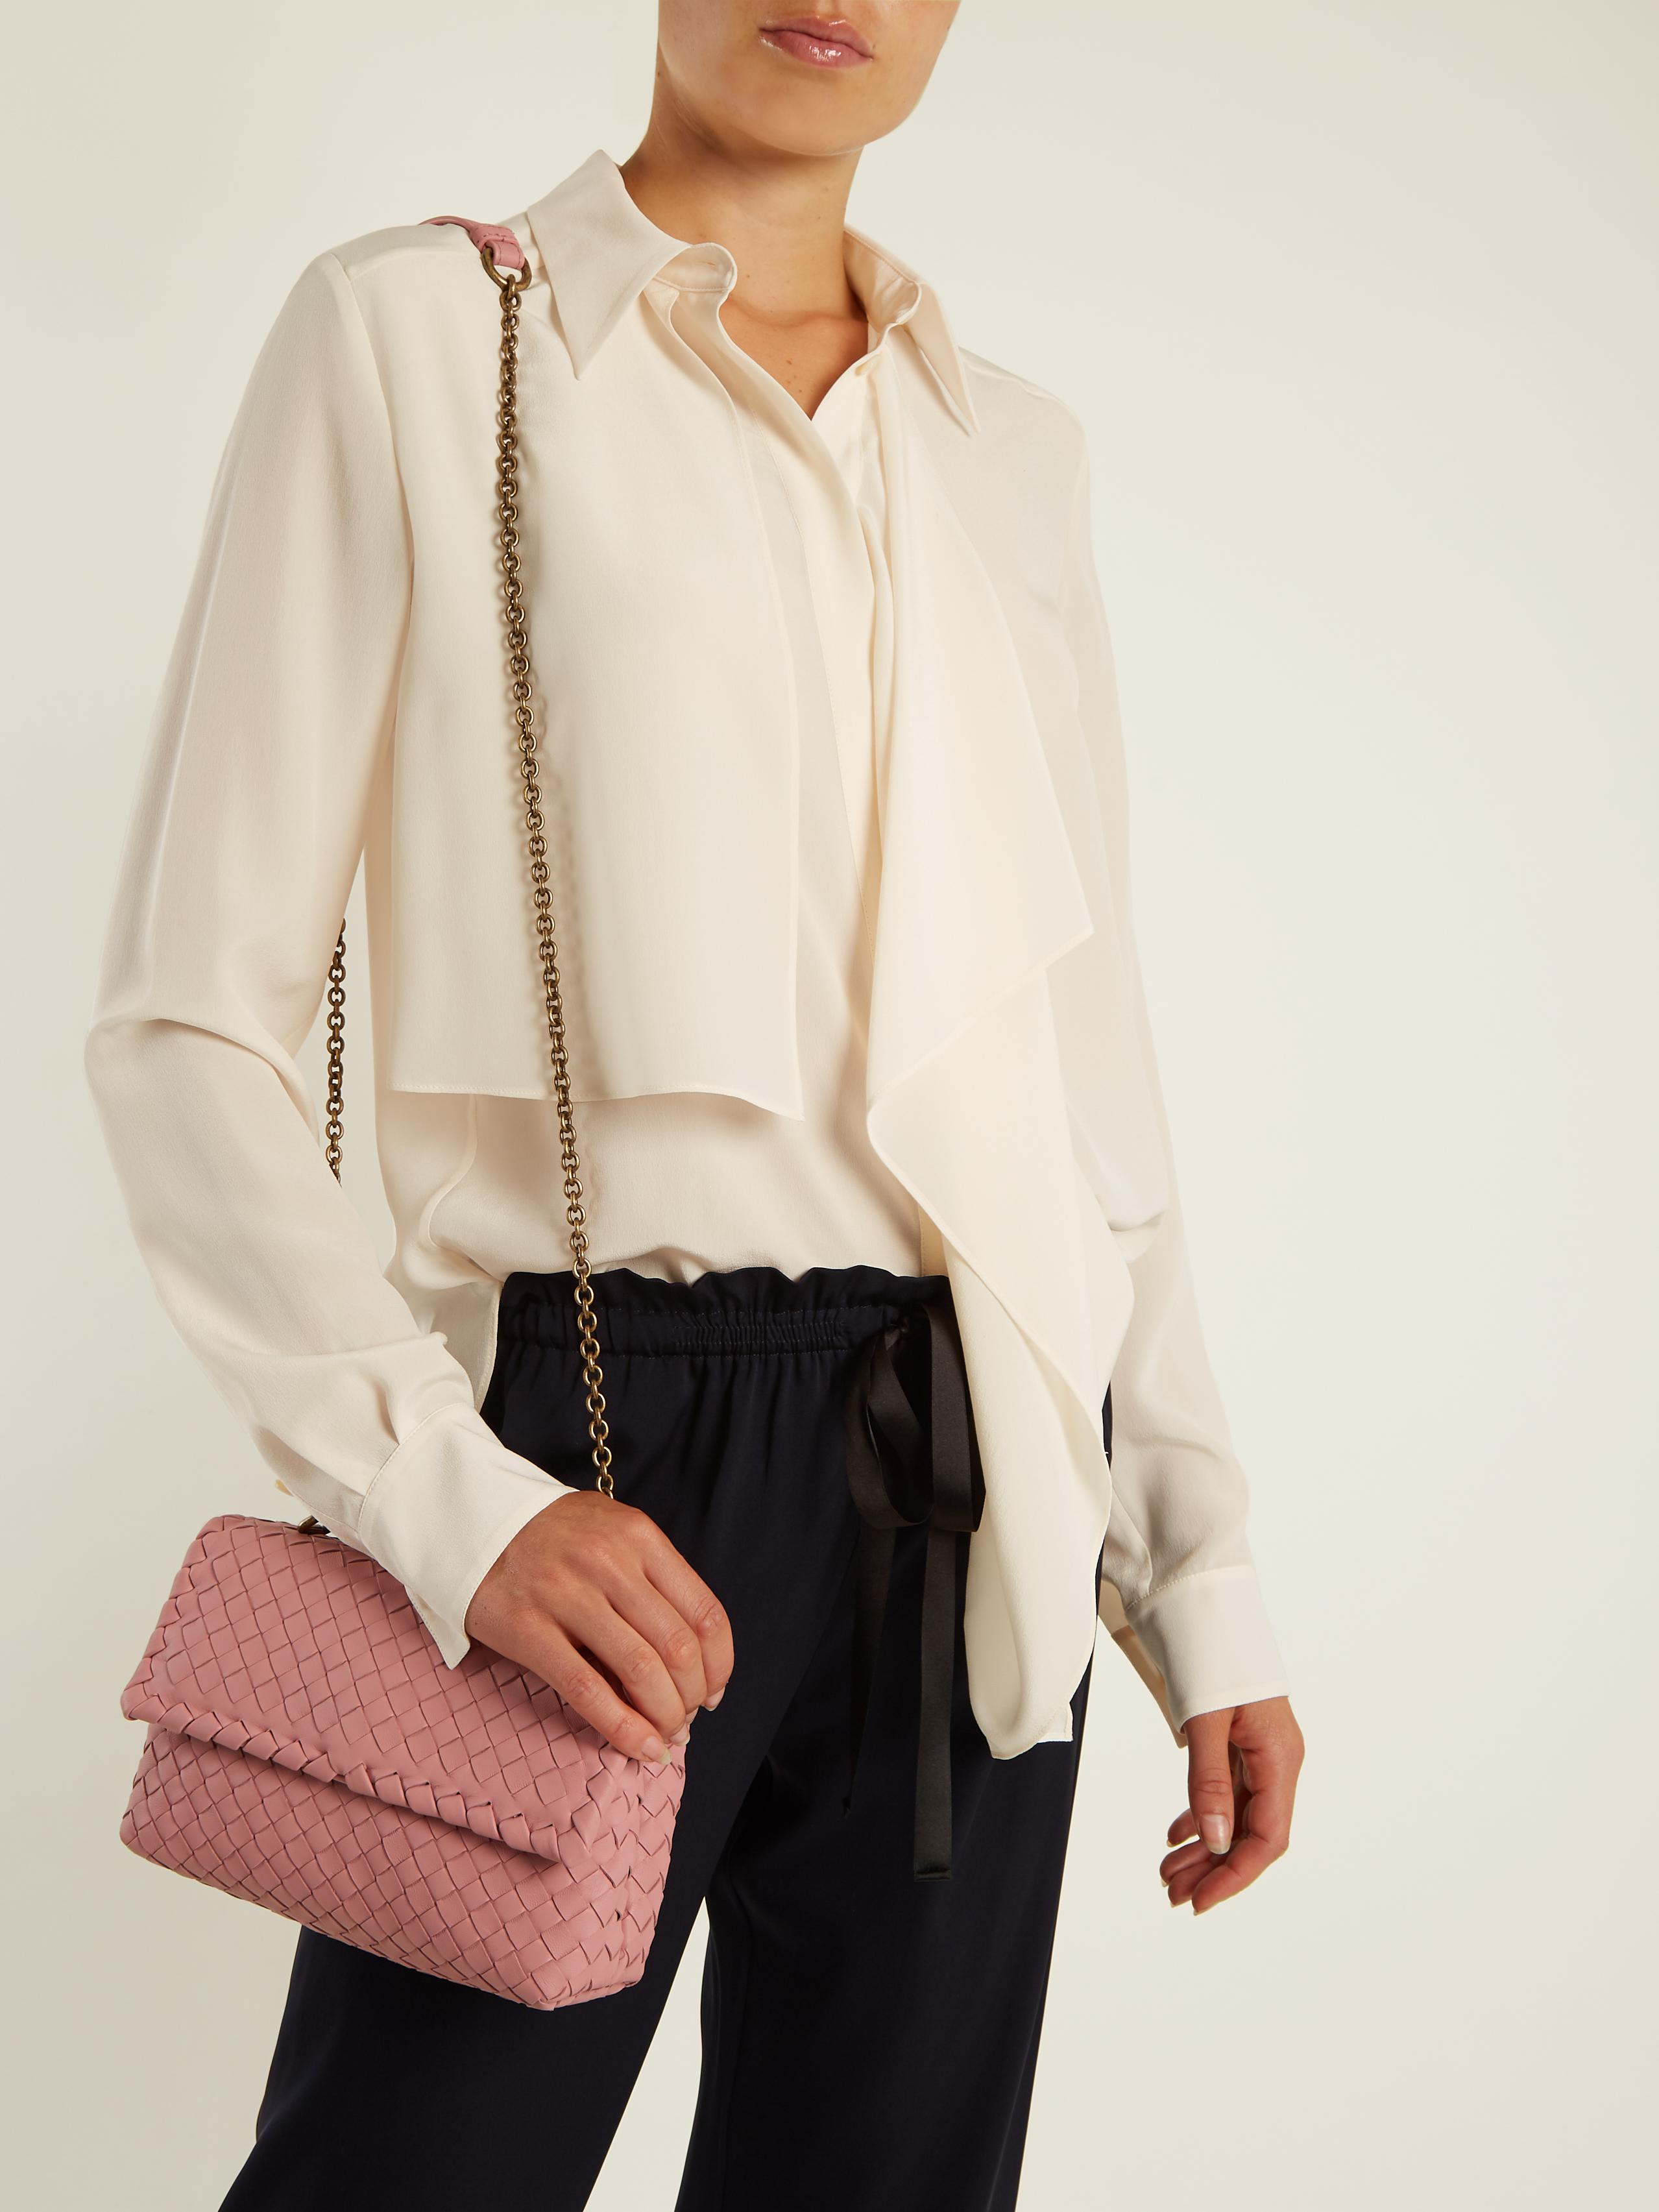 Bottega Veneta Olimpia Small Intrecciato Leather Shoulder Bag in